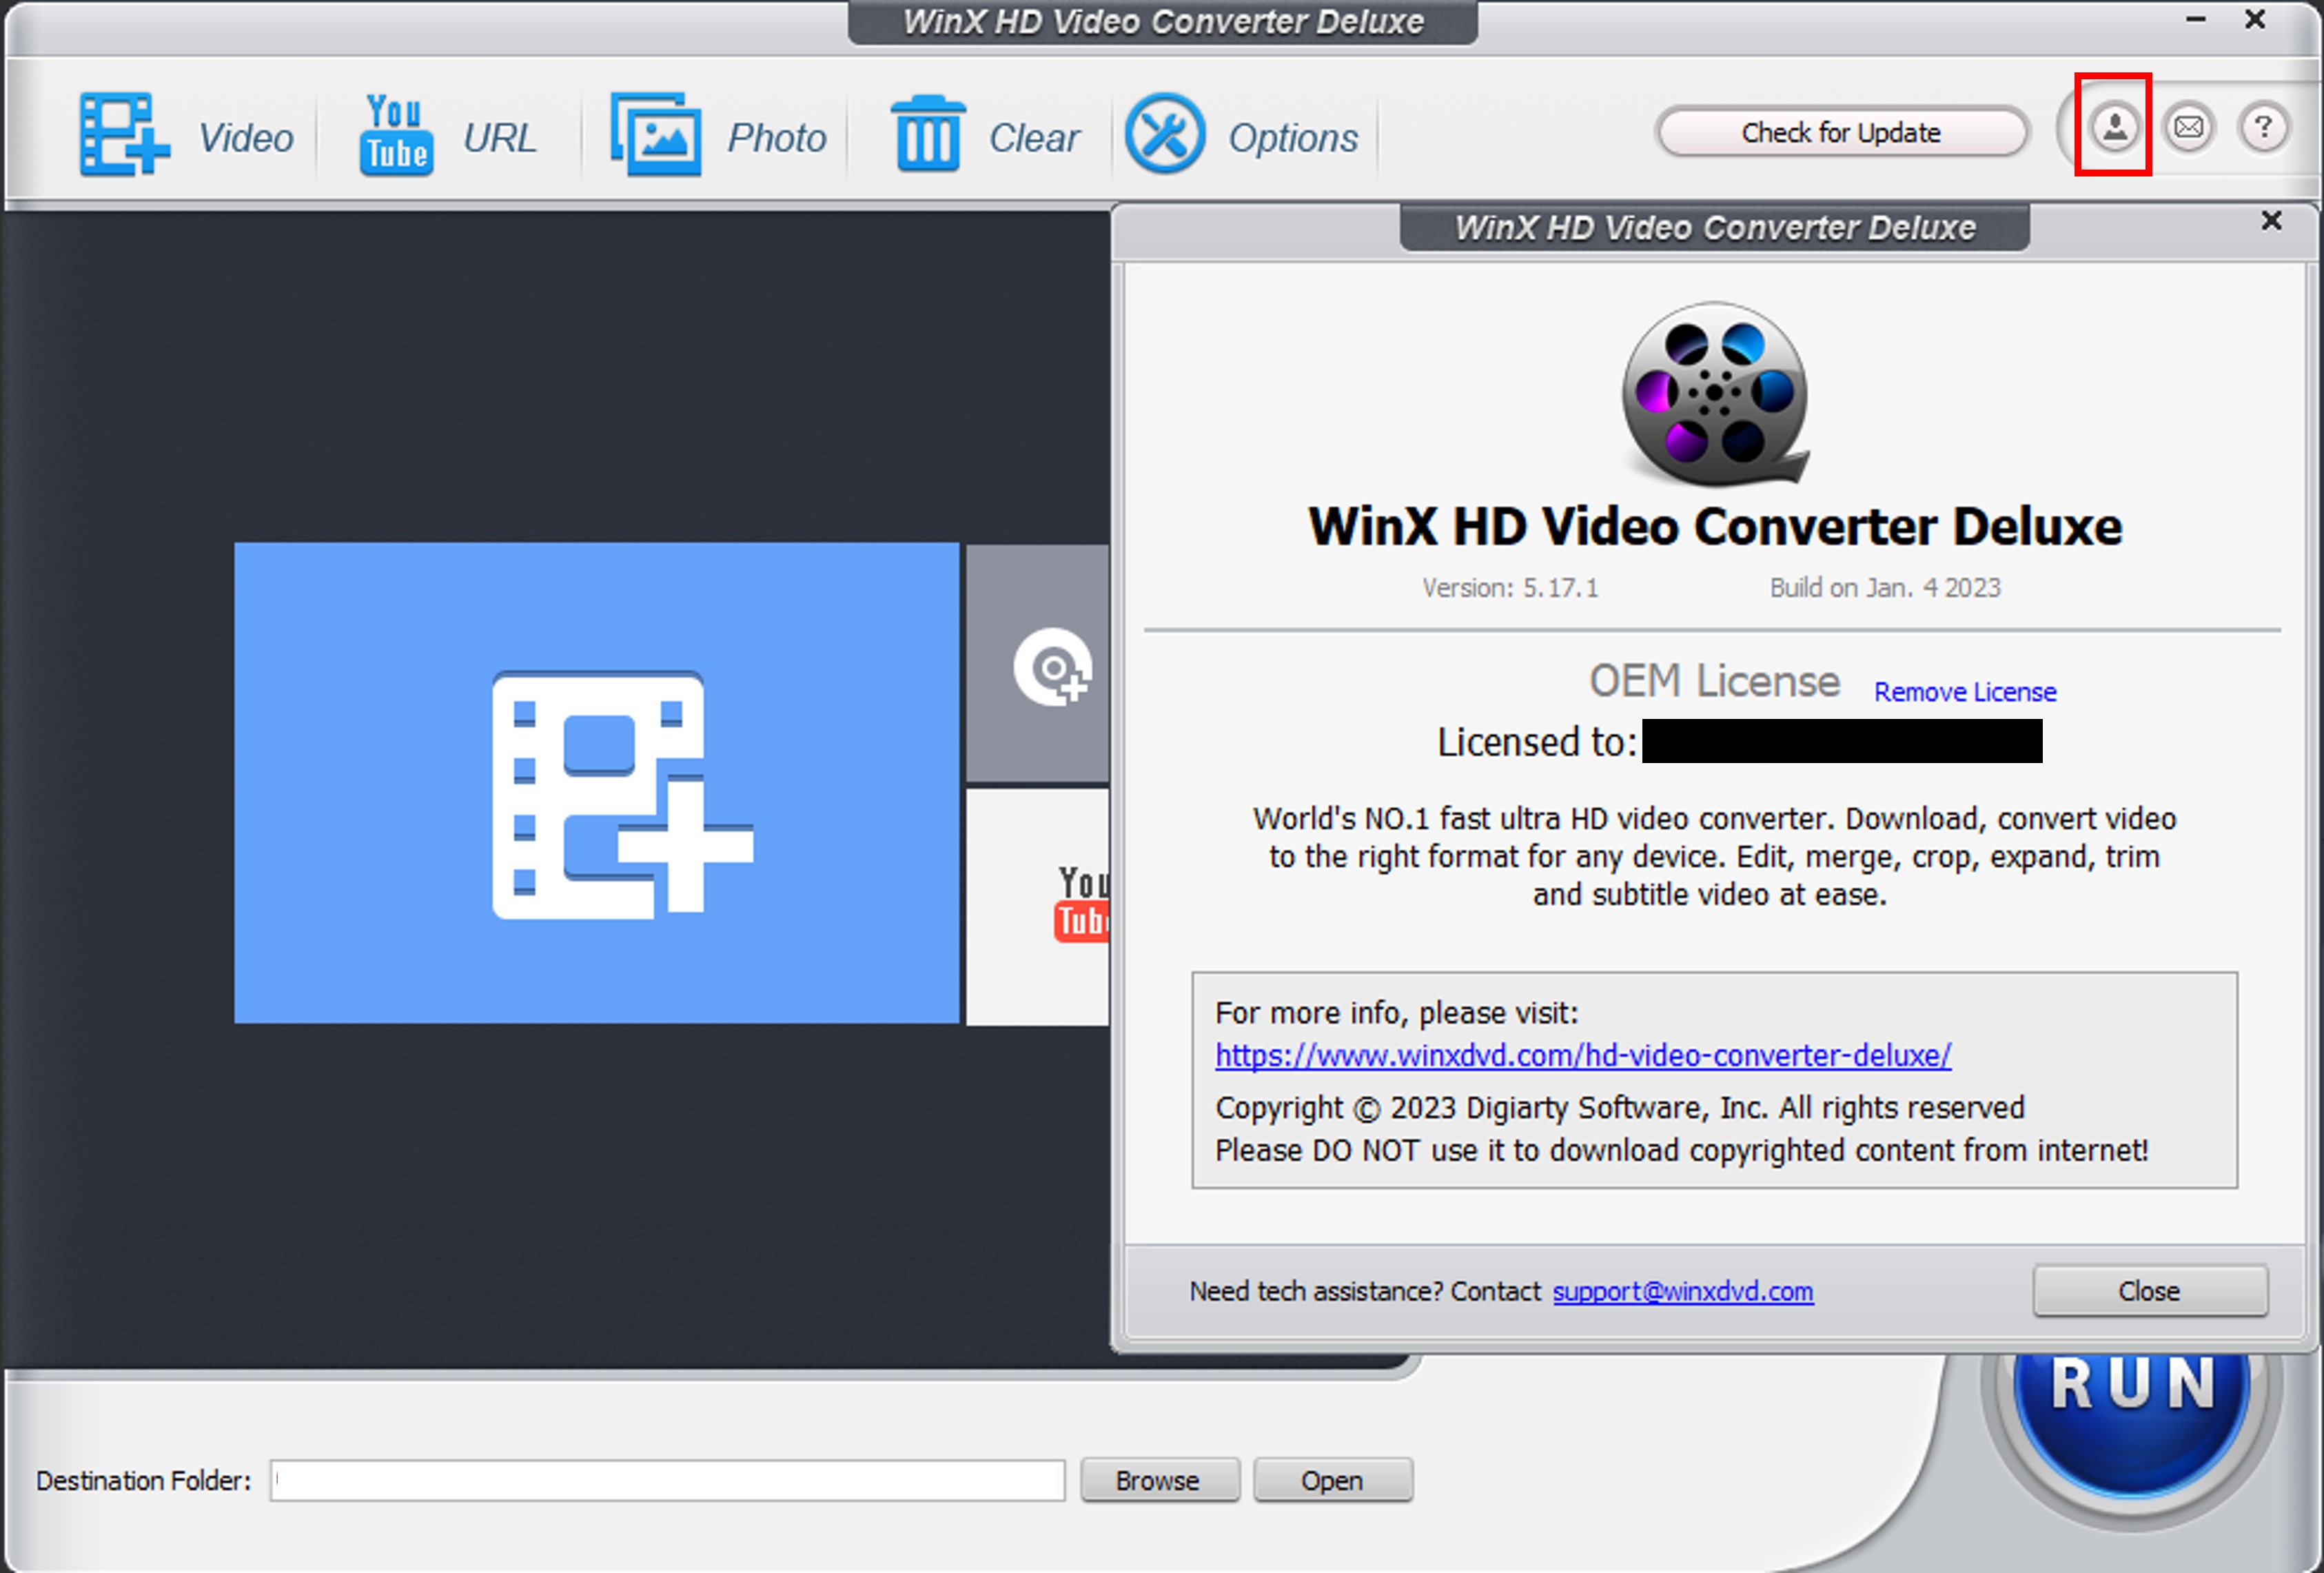 WinX_HD_Video_Converter_Deluxe-04A.jpg